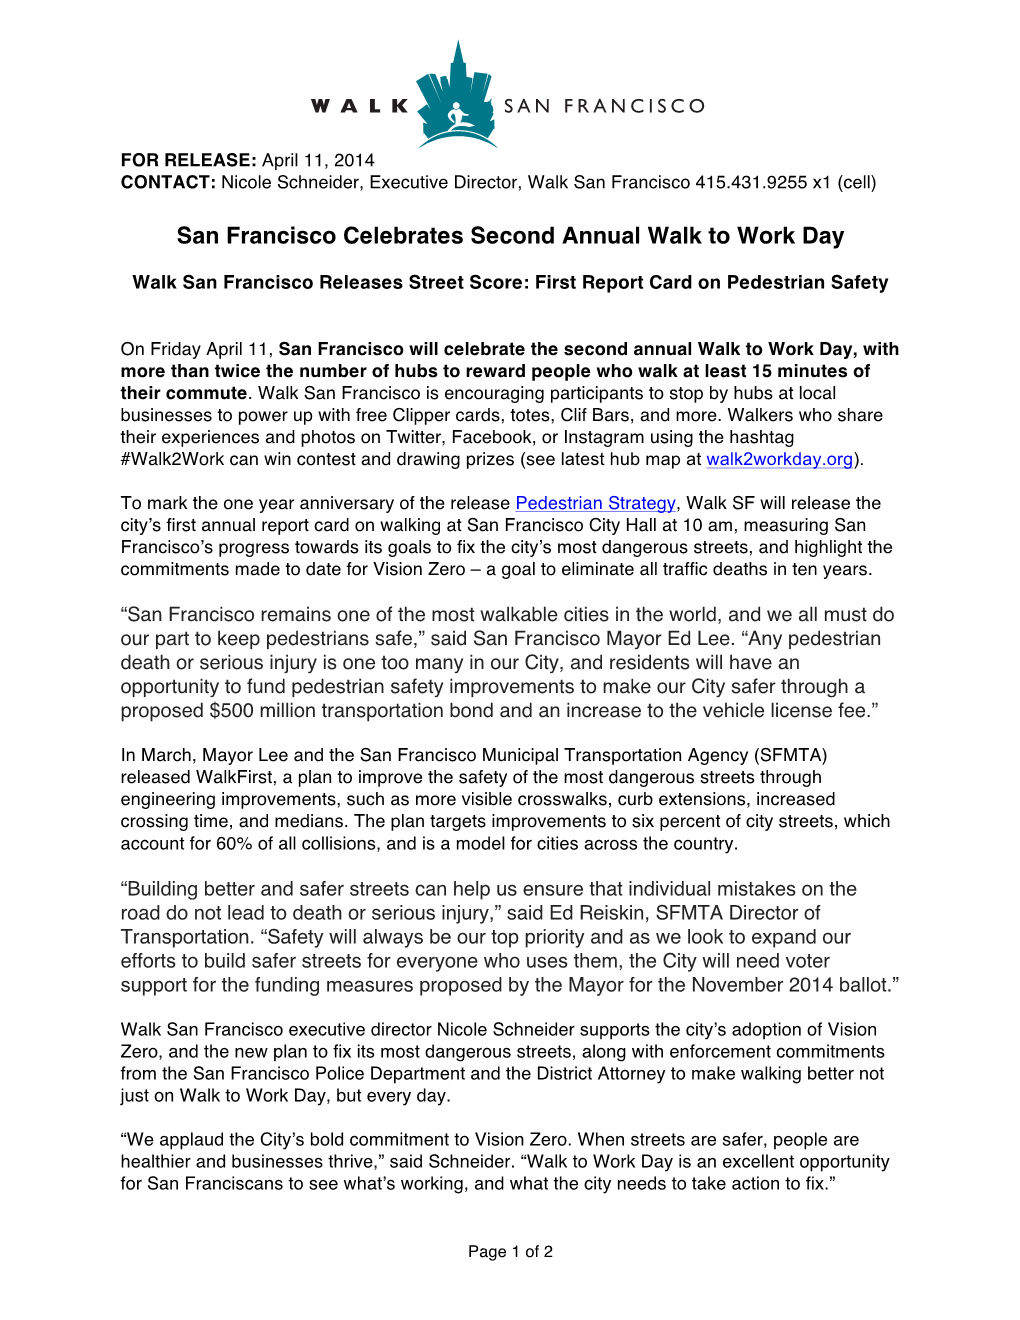 San Francisco Celebrates Second Annual Walk to Work Day